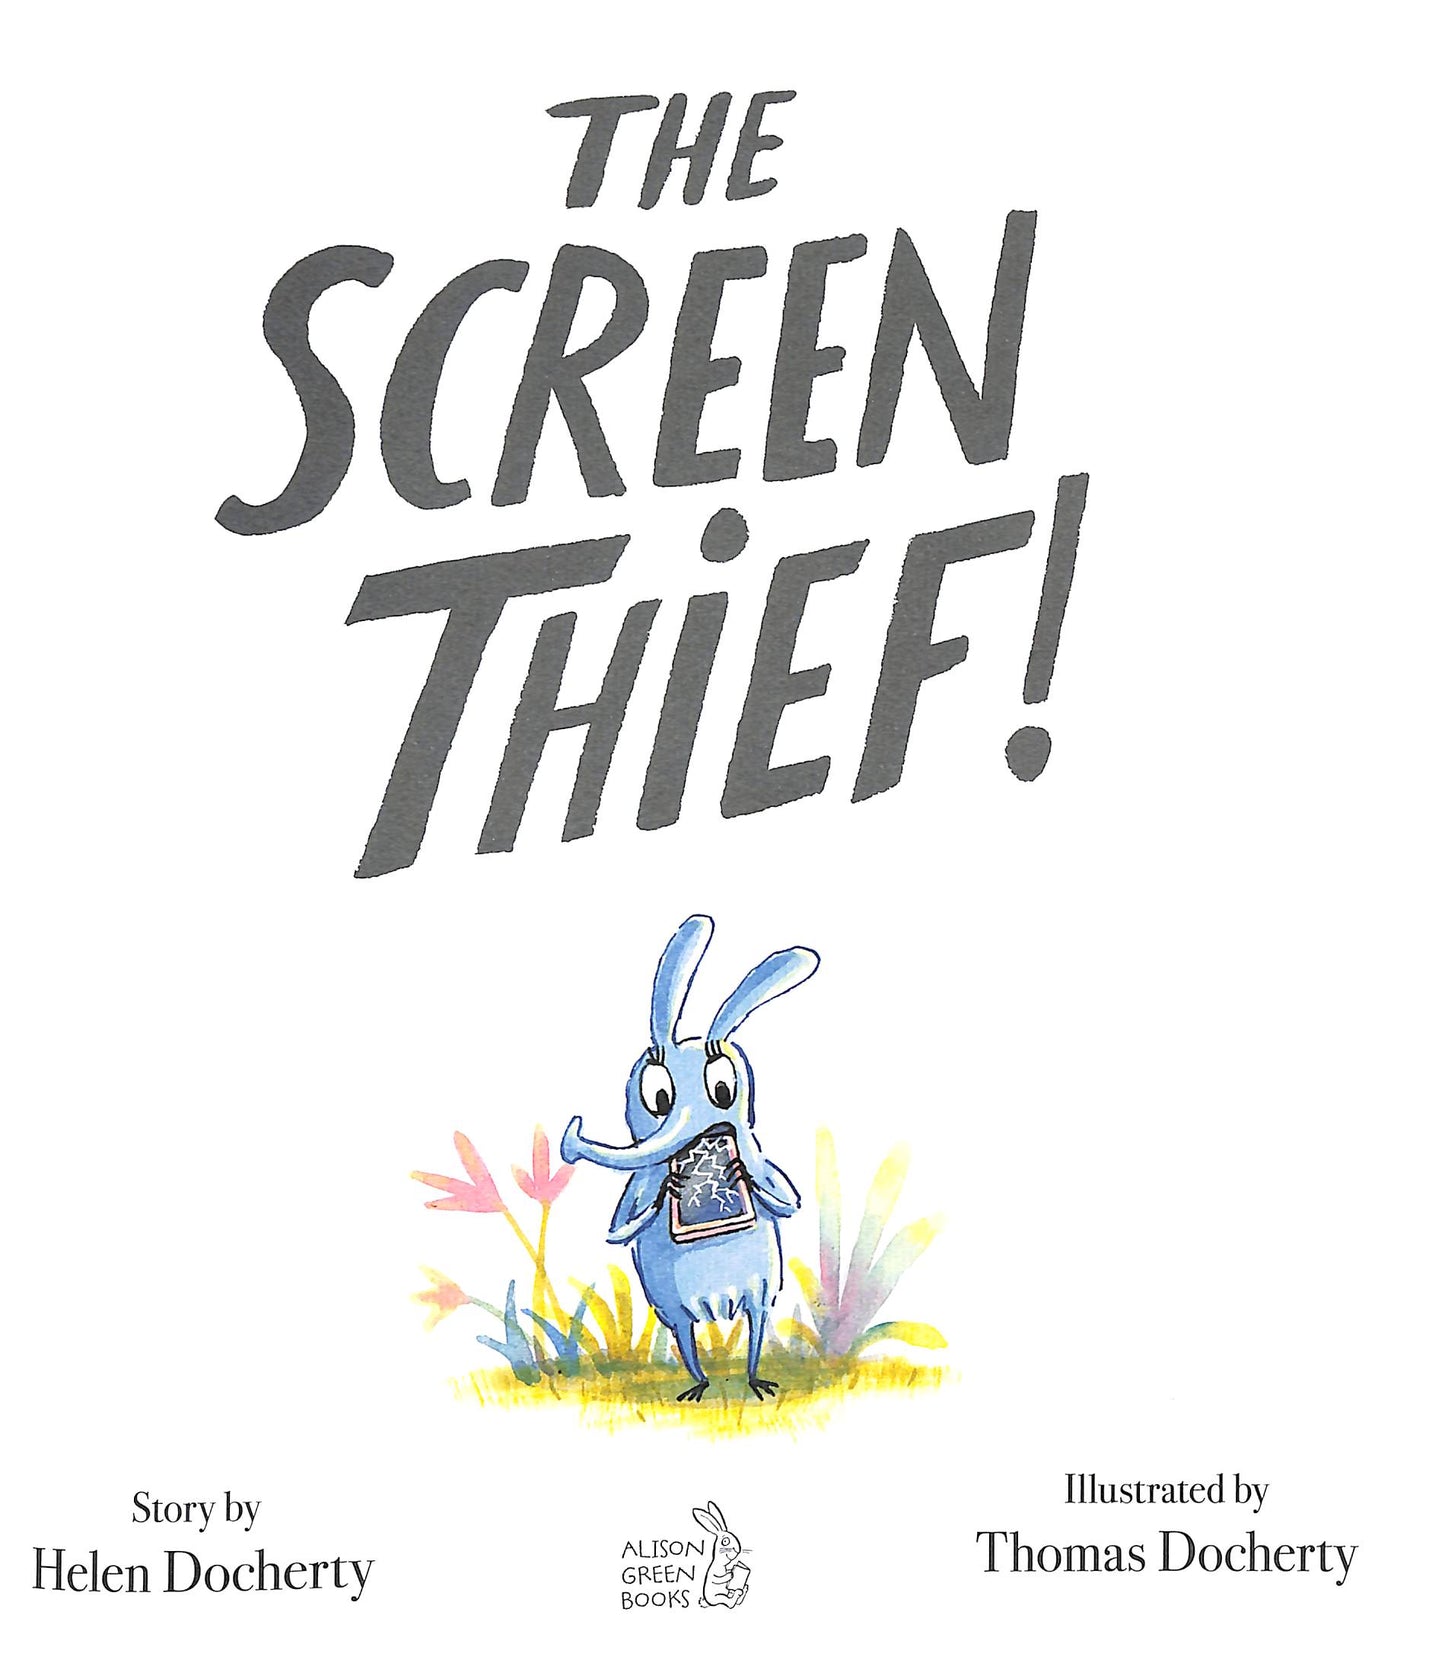 The Screen Thief by Helen Docherty & Thomas Docherty